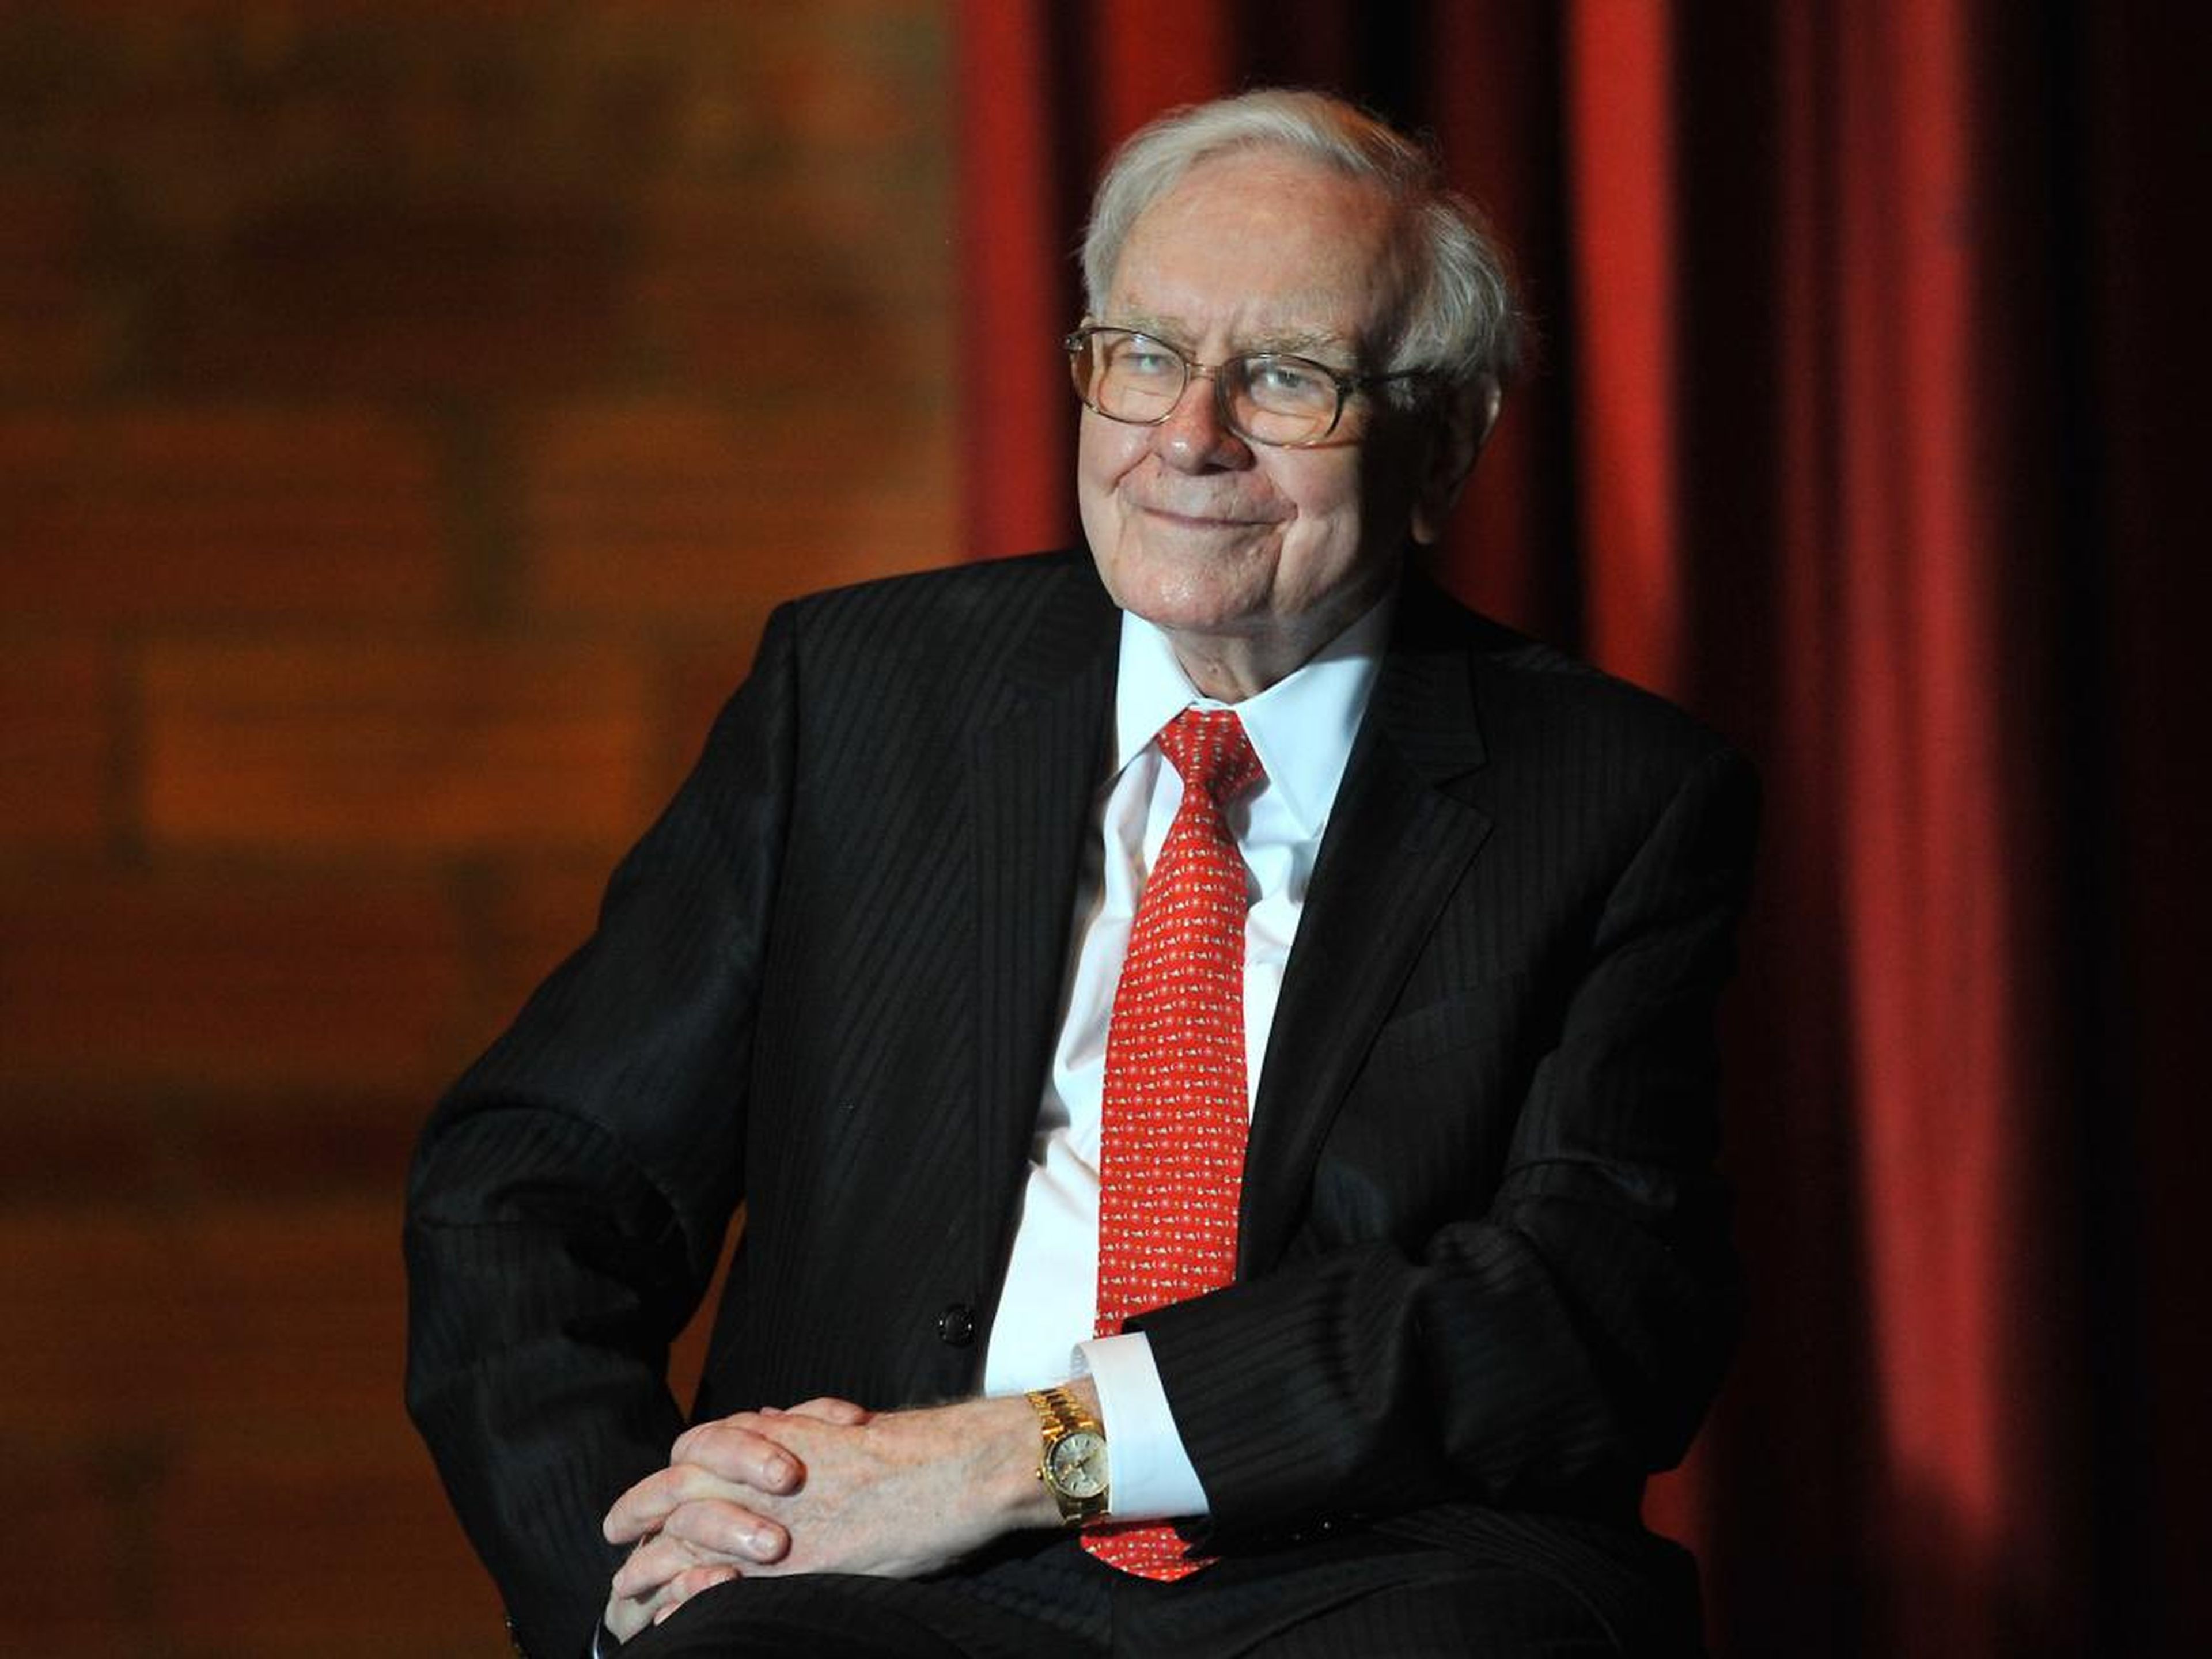 Warren Buffett has a net worth of $88.3 billion, making him the world's third richest person.